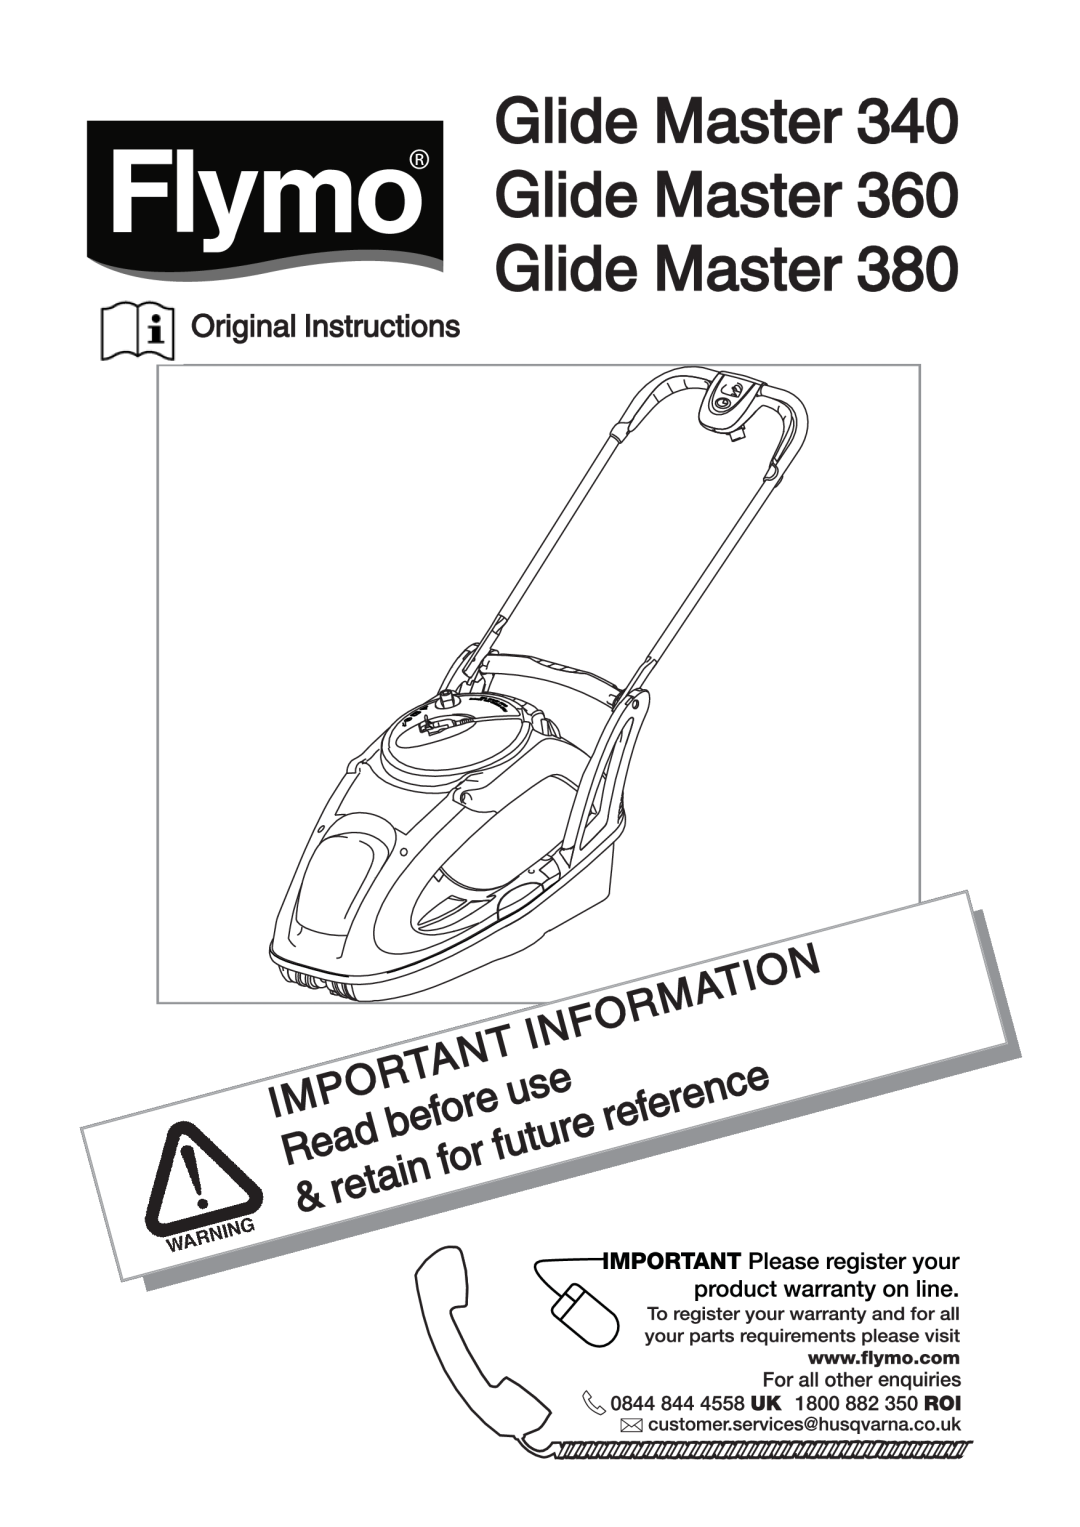 Husqvarna 380 manual Original Instructions, Glide Master Glide Master Glide Master, Information, reference, Read, before 